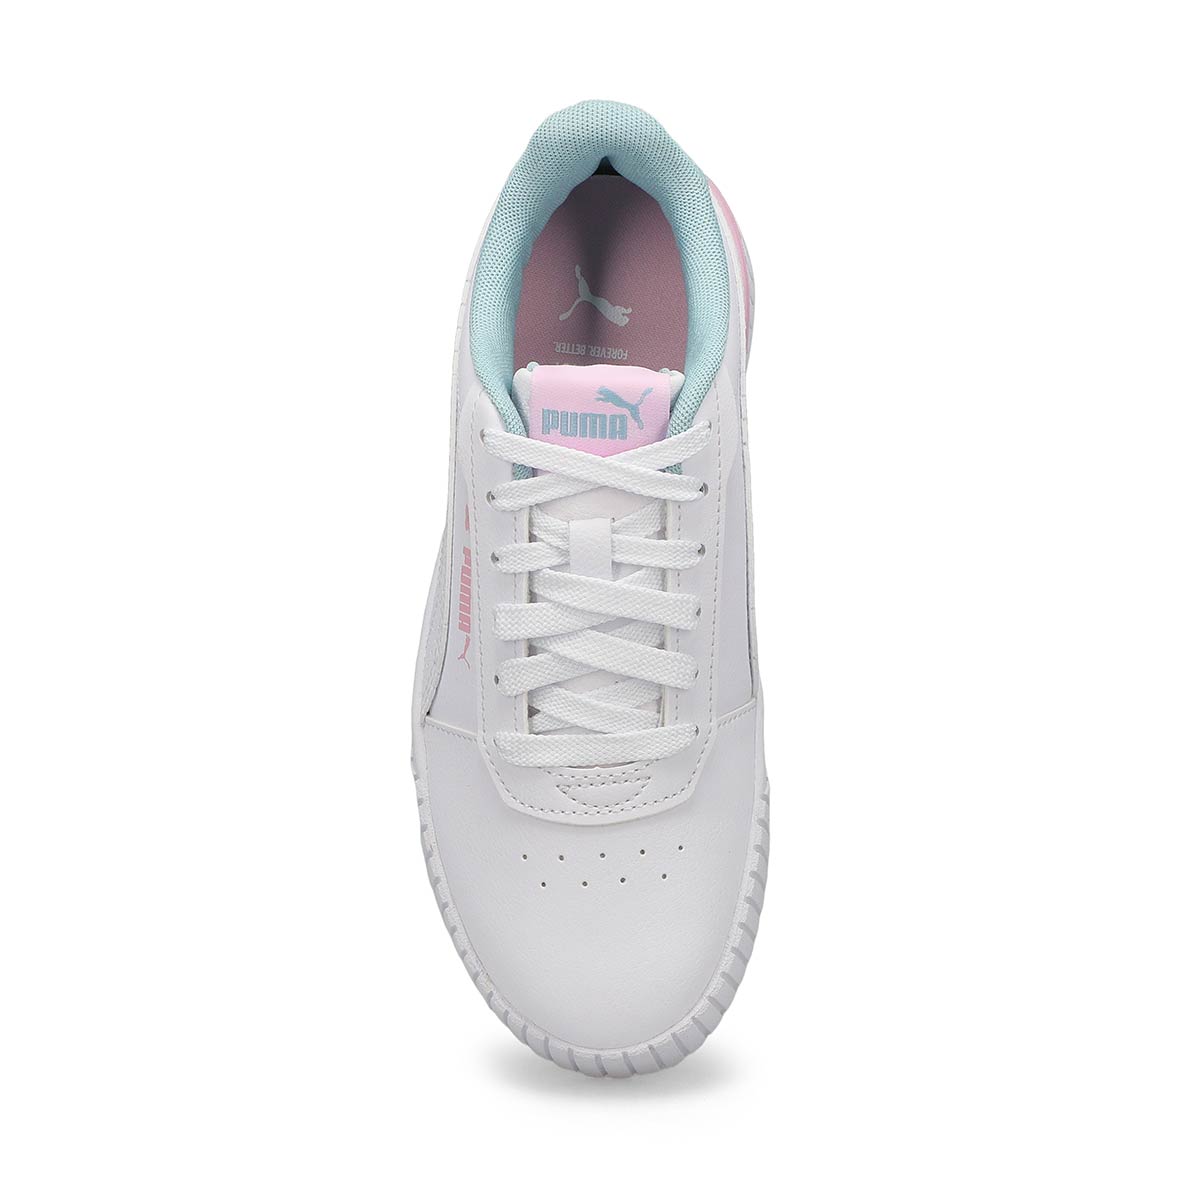 Girls Carina 2.0 Tropical Jr Sneaker - White/Turquoise/Grape